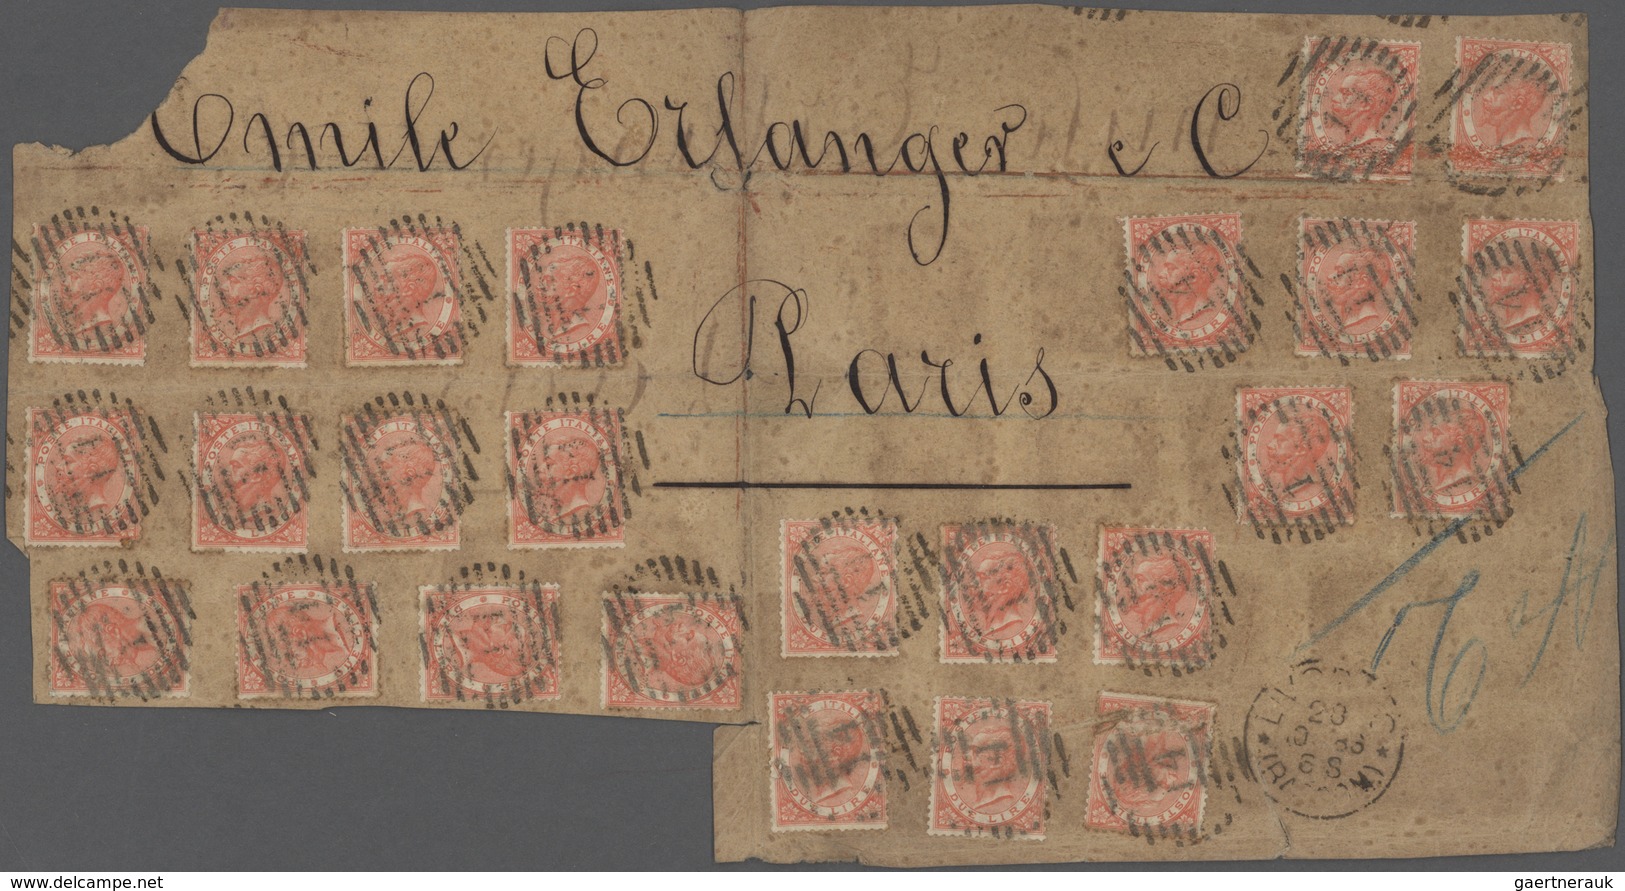 Italien: 1863 'King Victor Emanuel II.' 2l. Orange 25 SINGLES Used On Large Part Of Large-size Regis - Ongebruikt